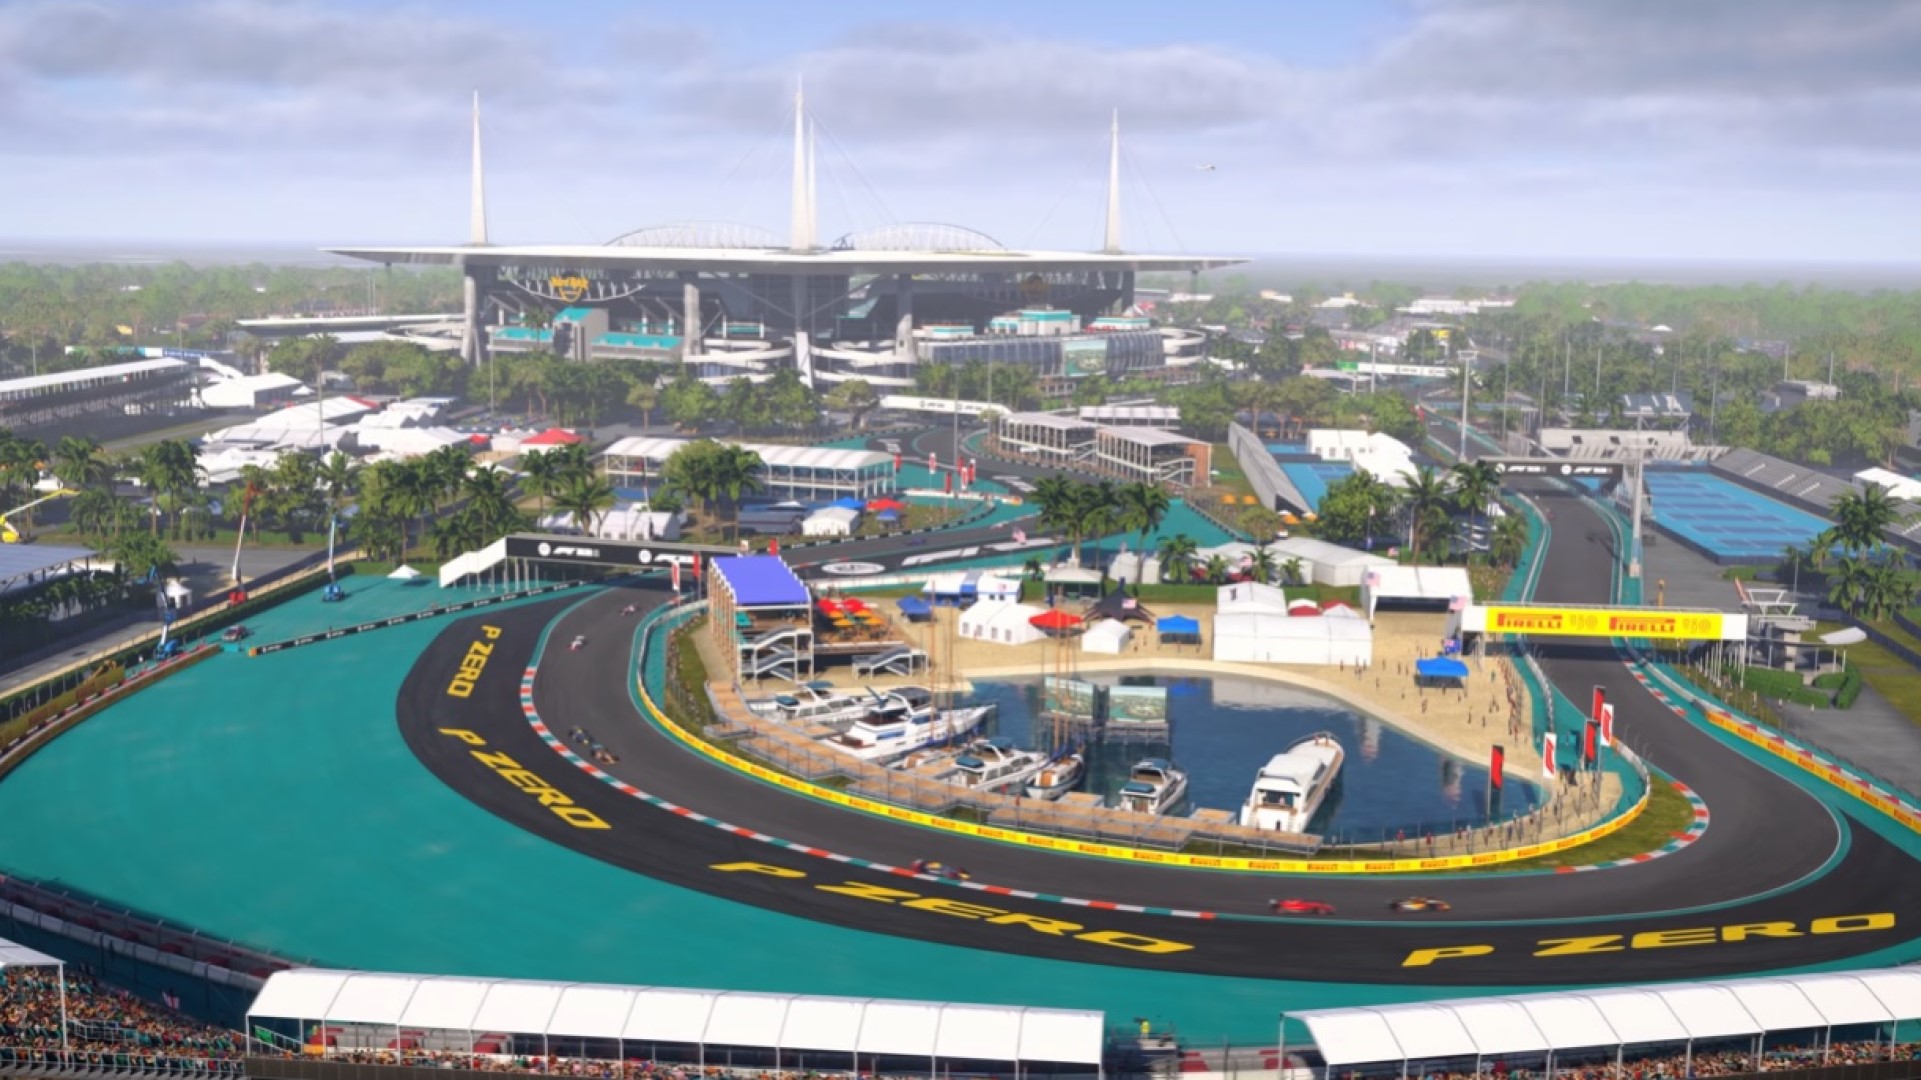 《F1 22》新预告展示迈阿密国际赛道预热场景